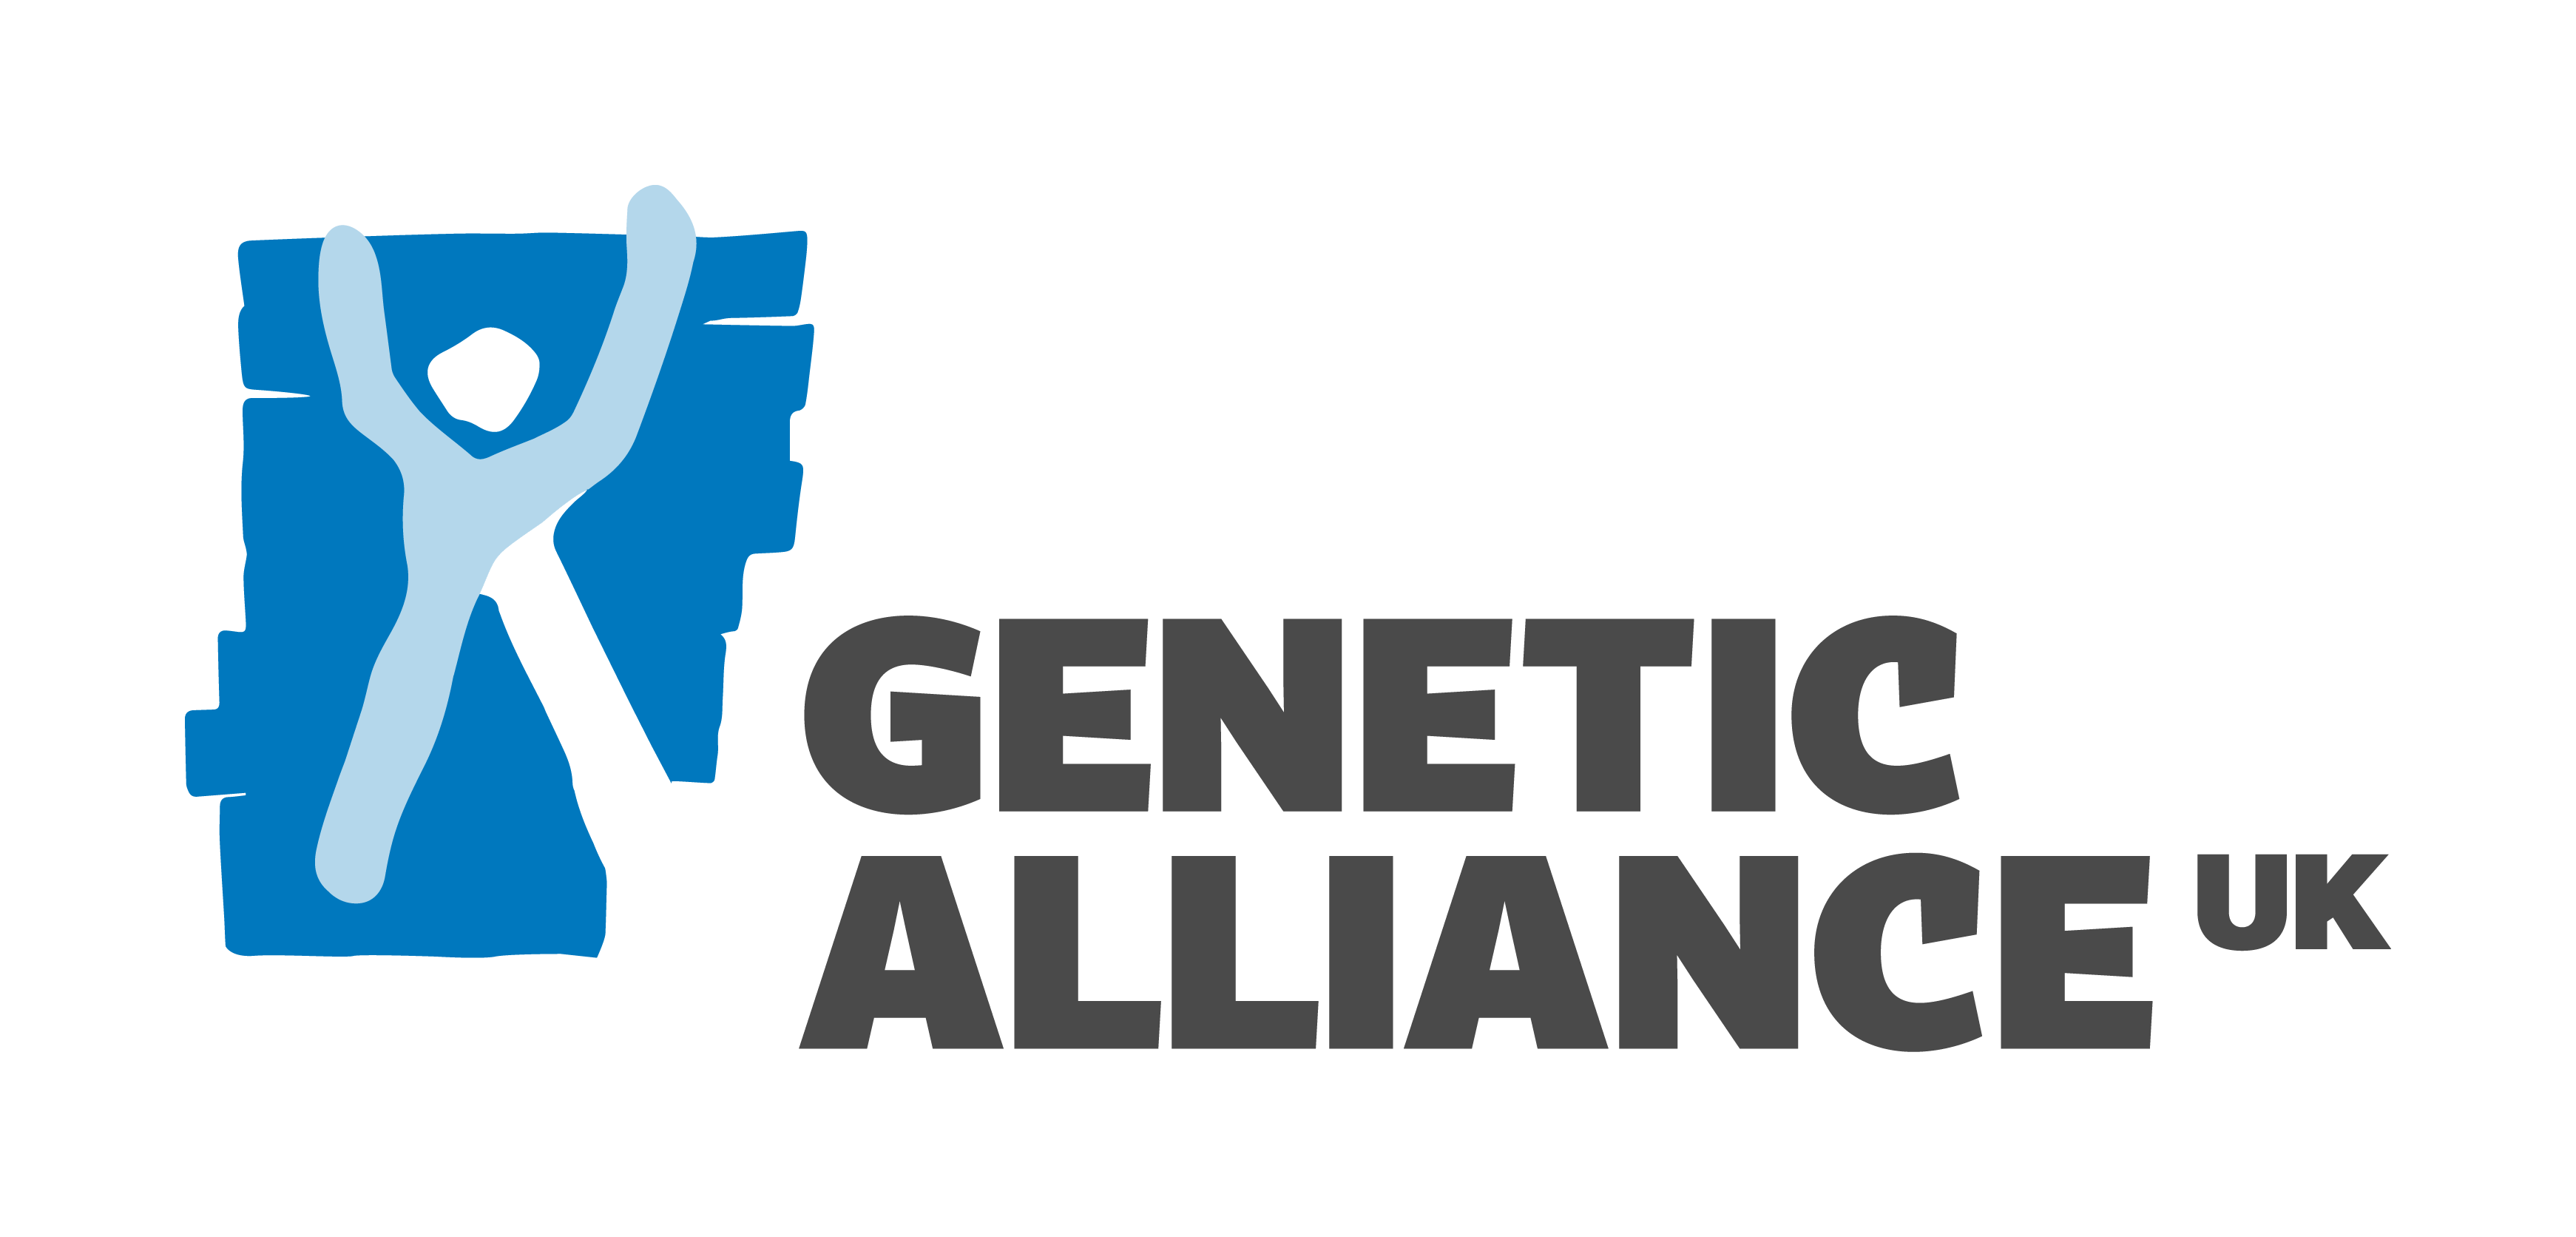 Logo: Genetic Alliance UK